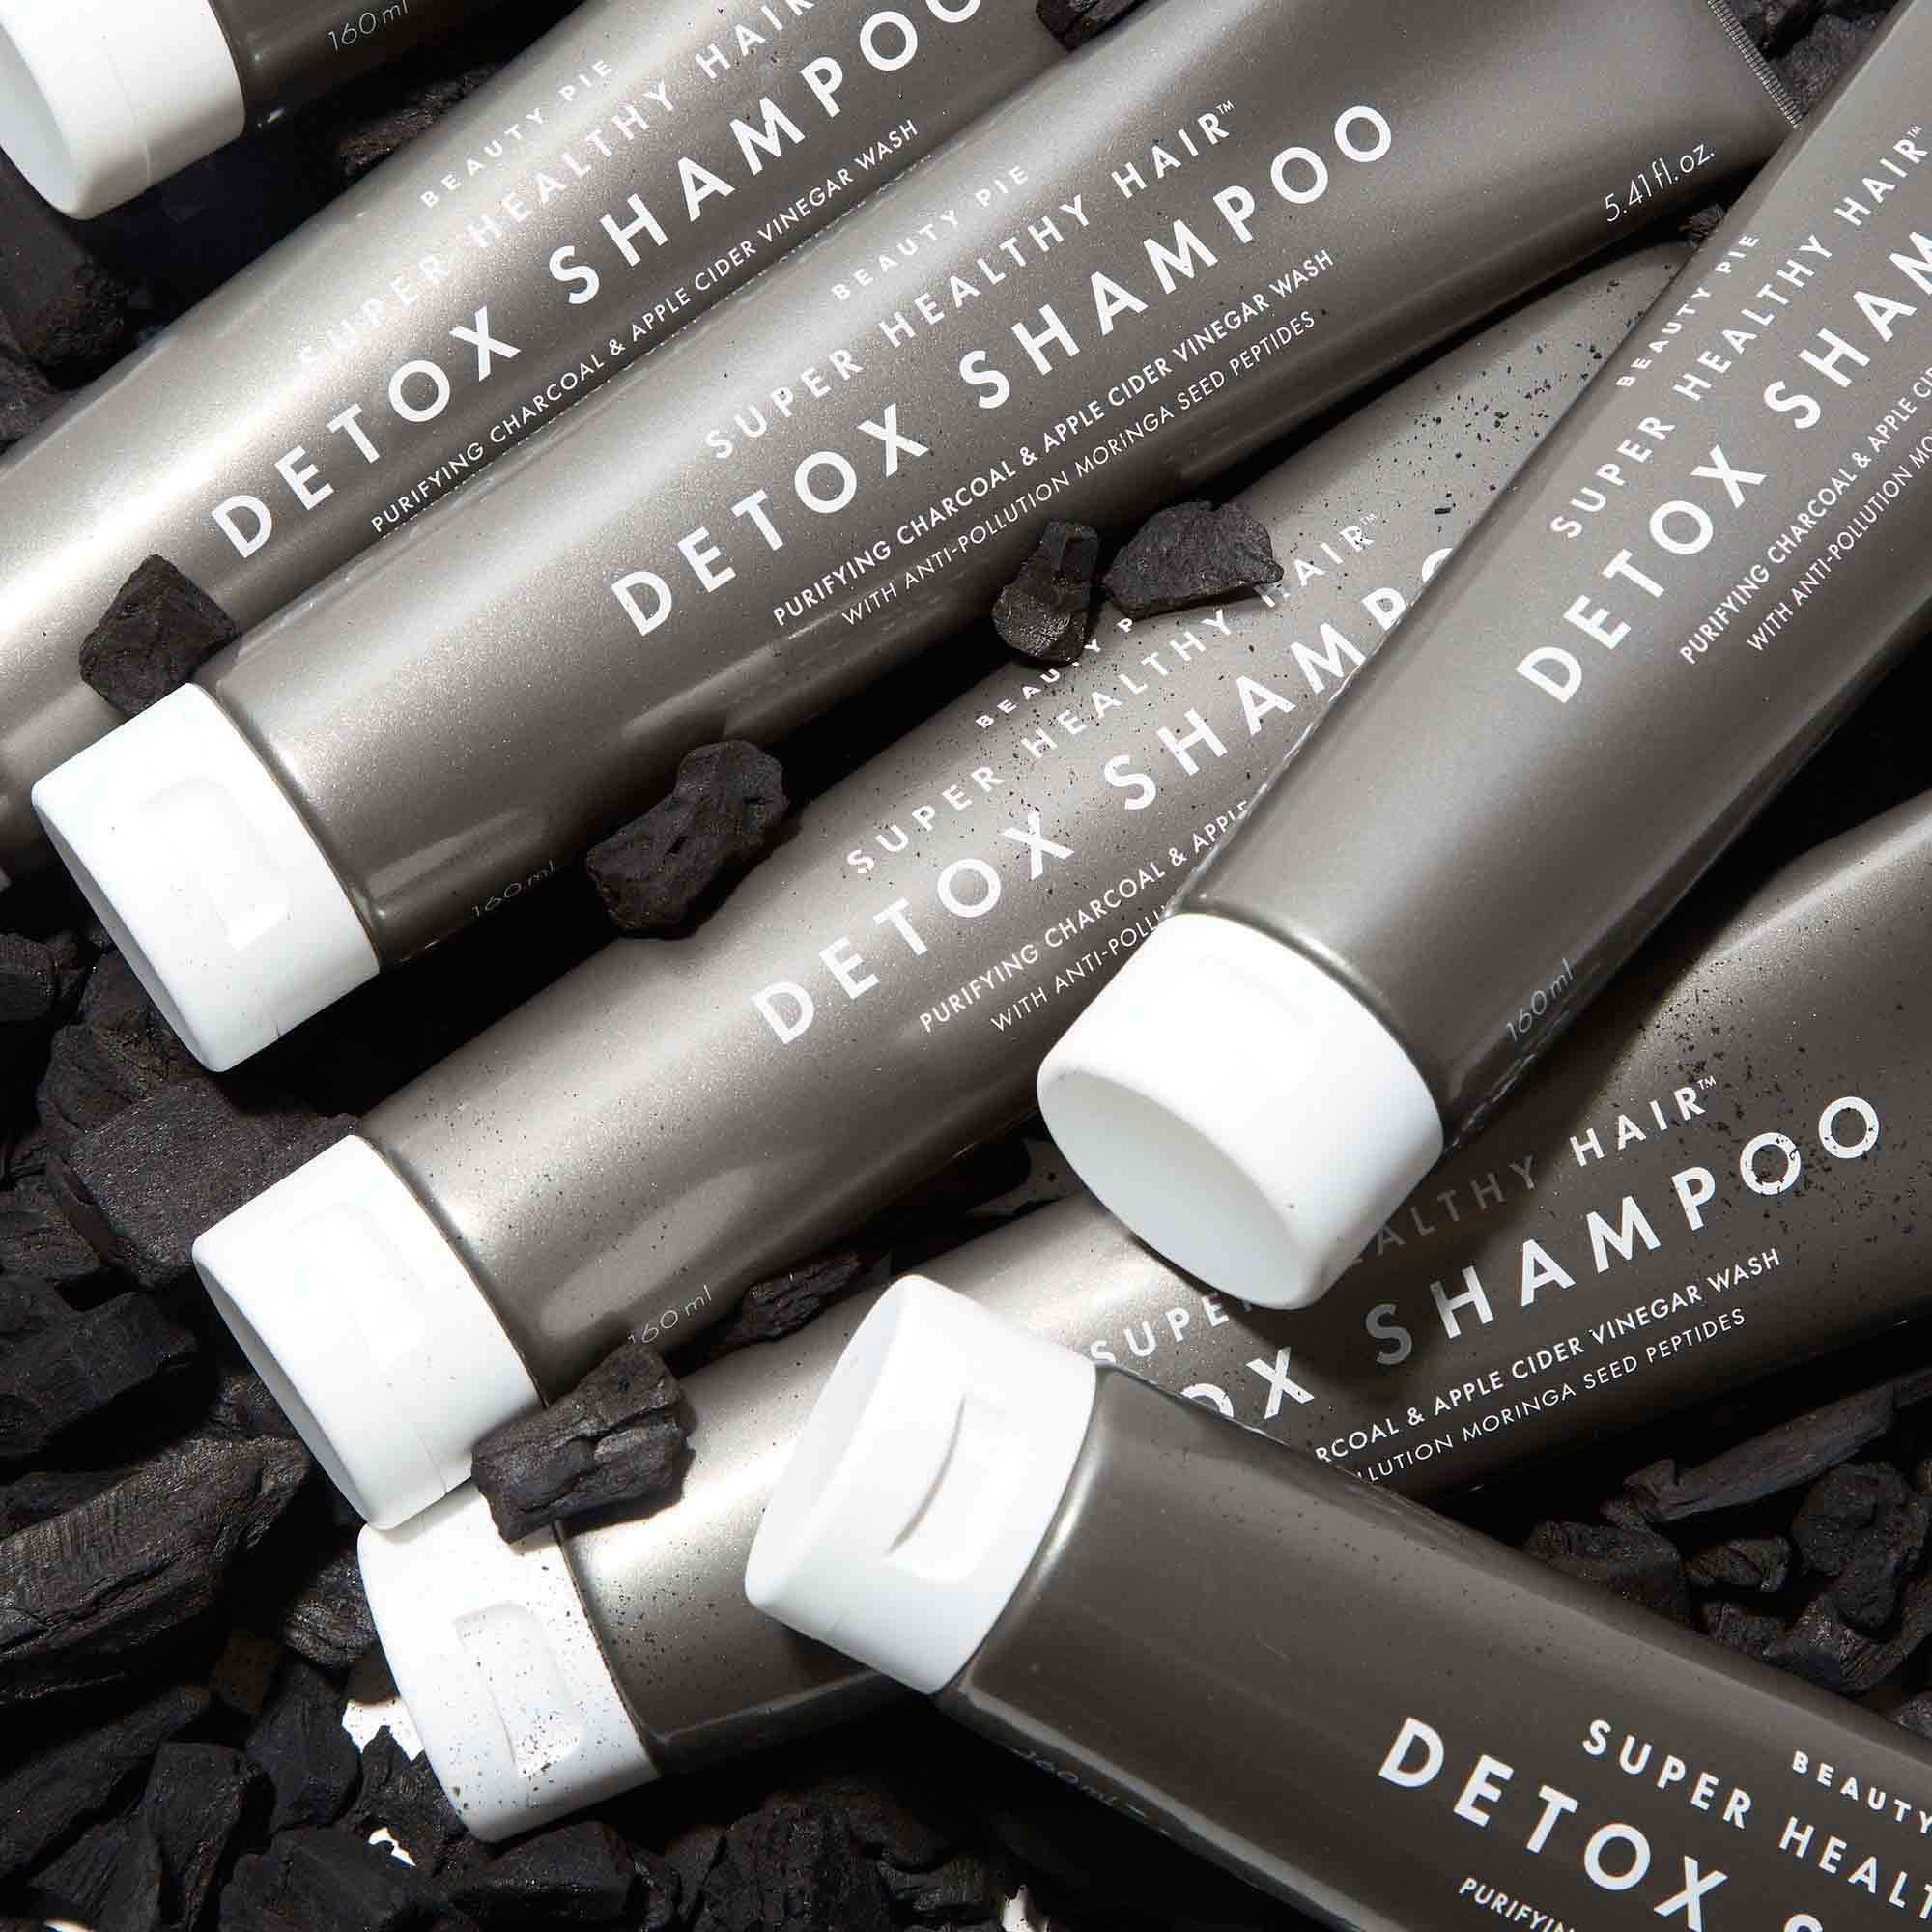 The salon-strengthening detox wash shampoo